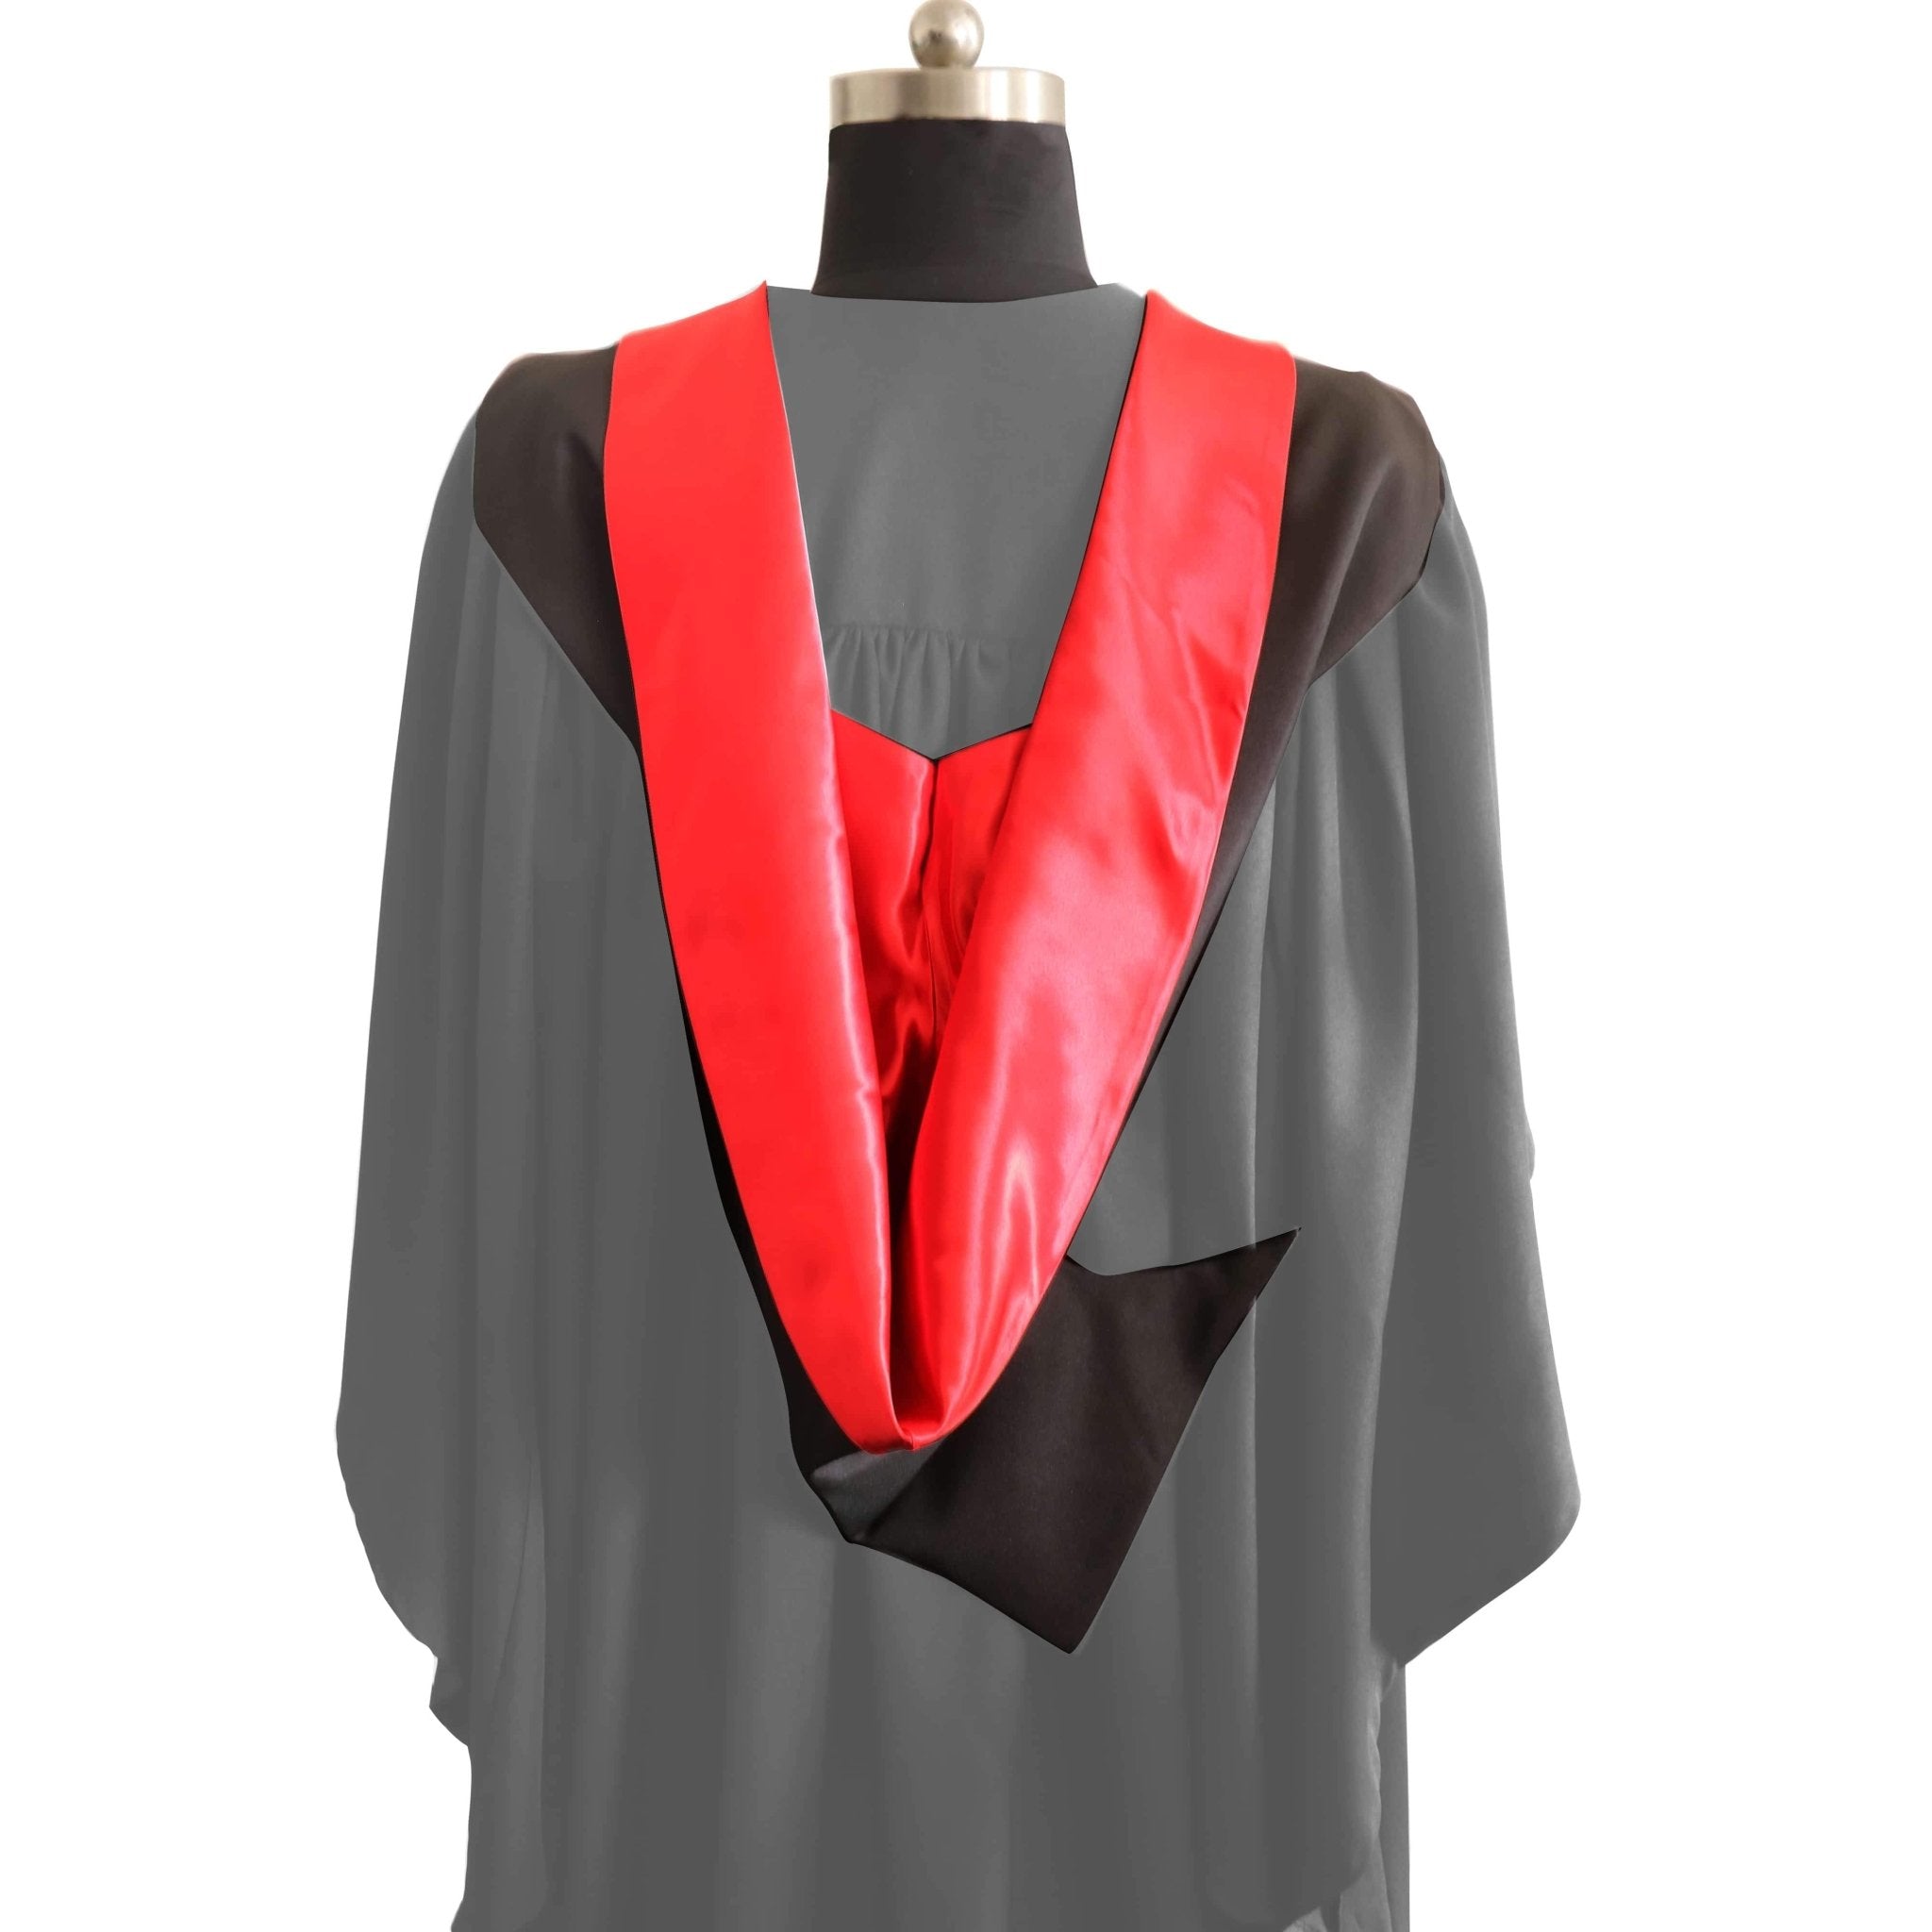 Simple Shape Burgon Academic Hood - Bachelor's Hood - Graduation Gowns UK